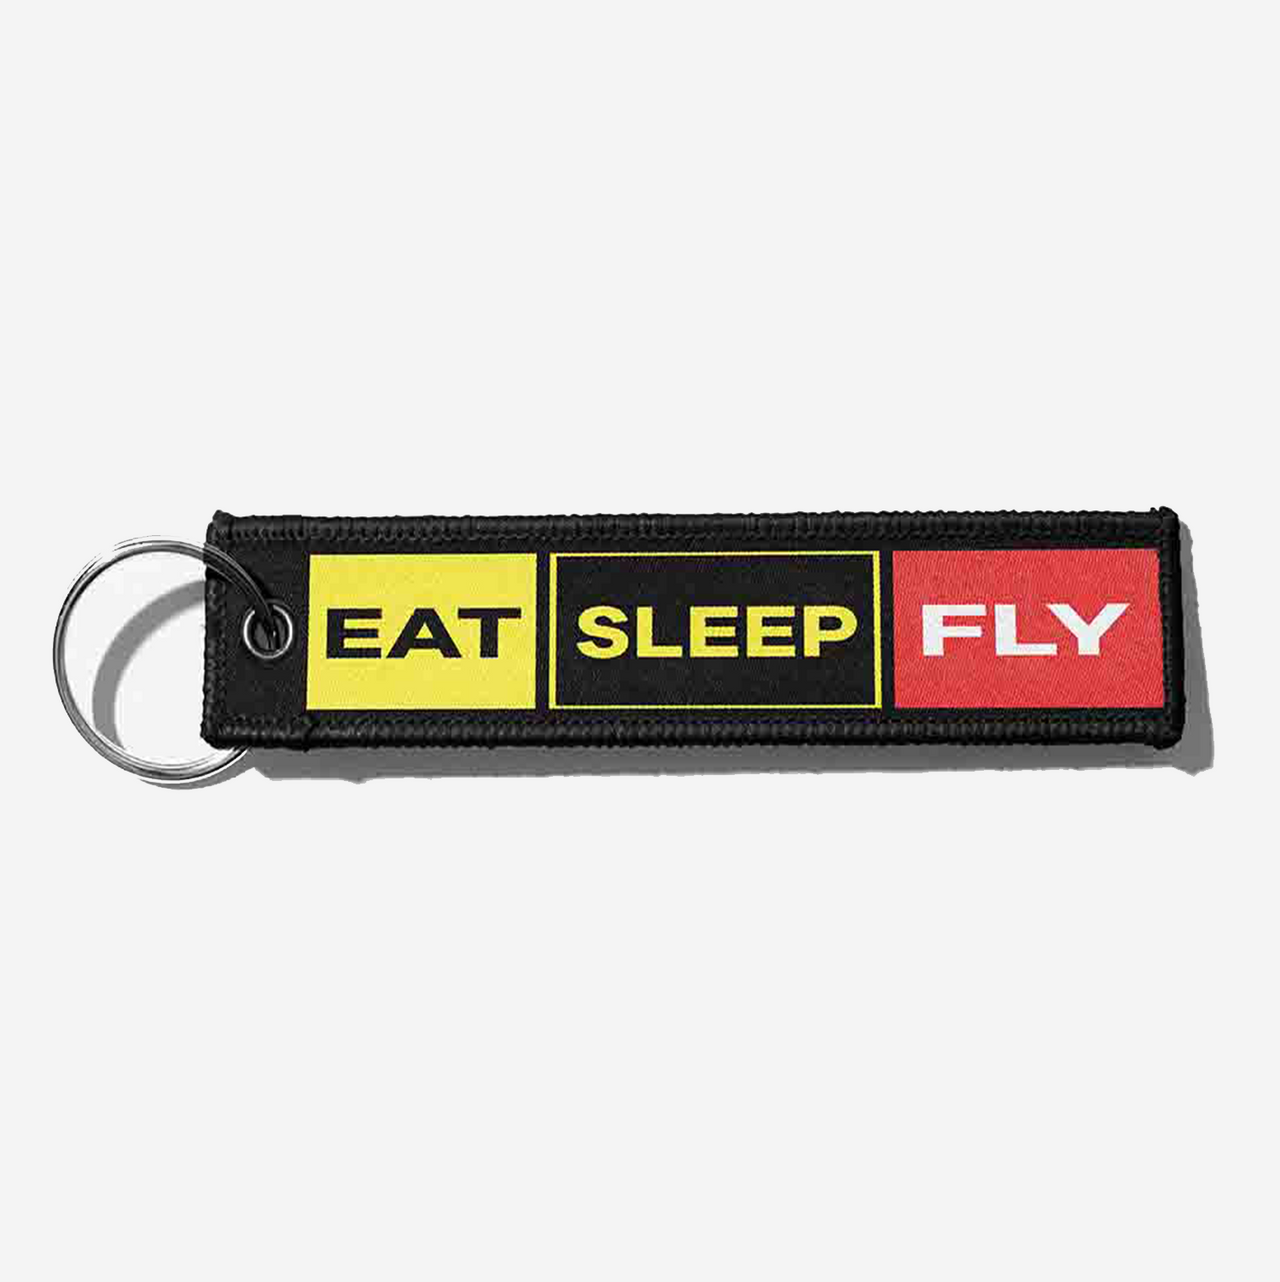 Eat Sleep Fly (Colourful) Designed Key Chains